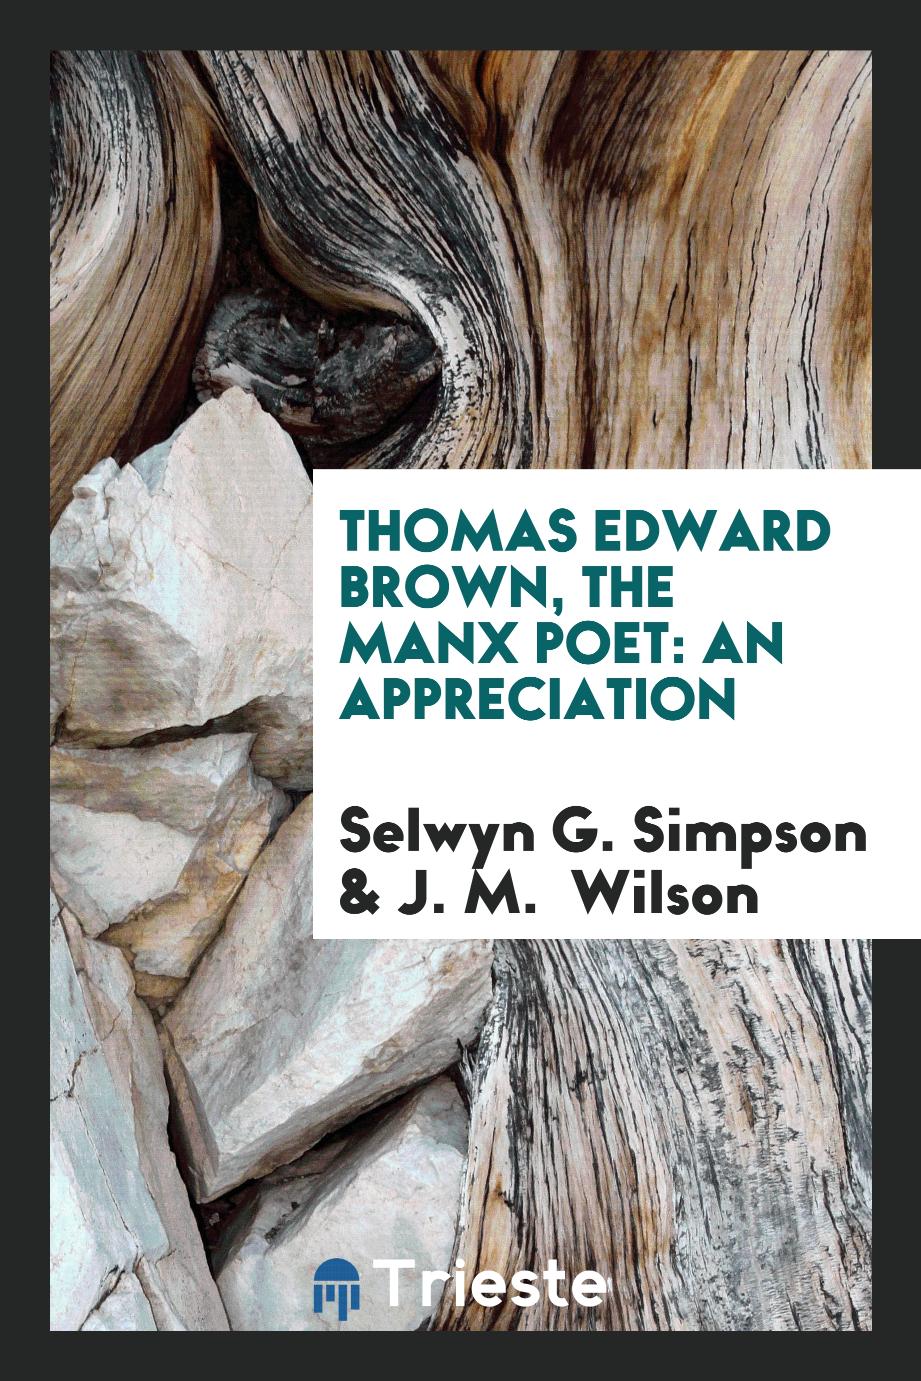 Thomas Edward Brown, the Manx poet: an appreciation